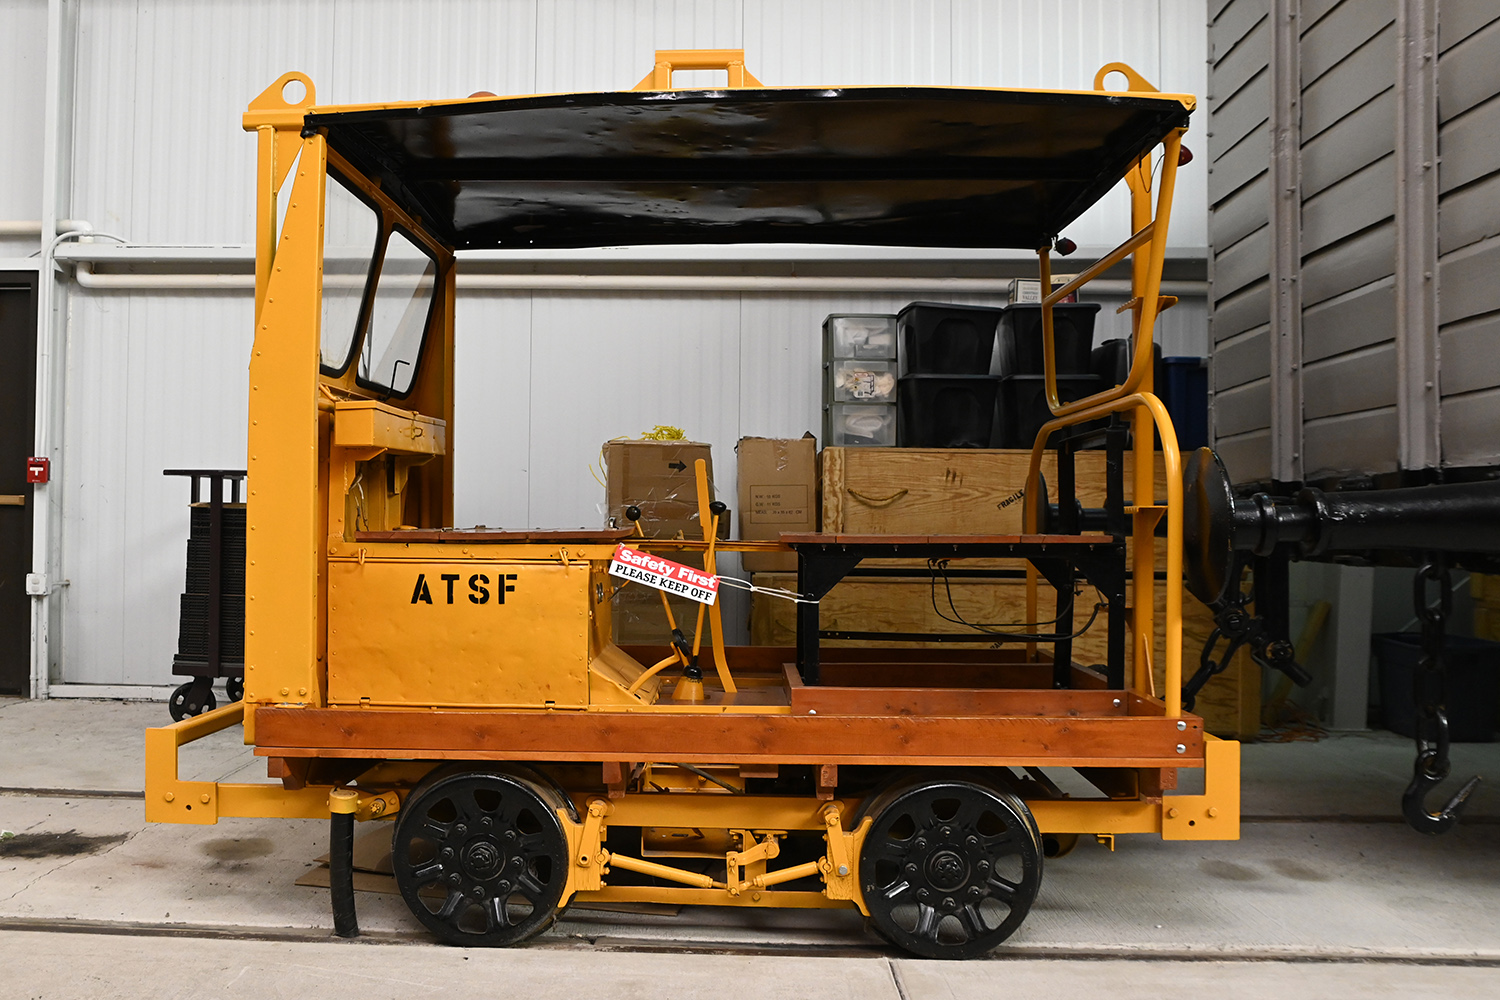 Atchison, Topeka & Santa Fe maintenance vehicle